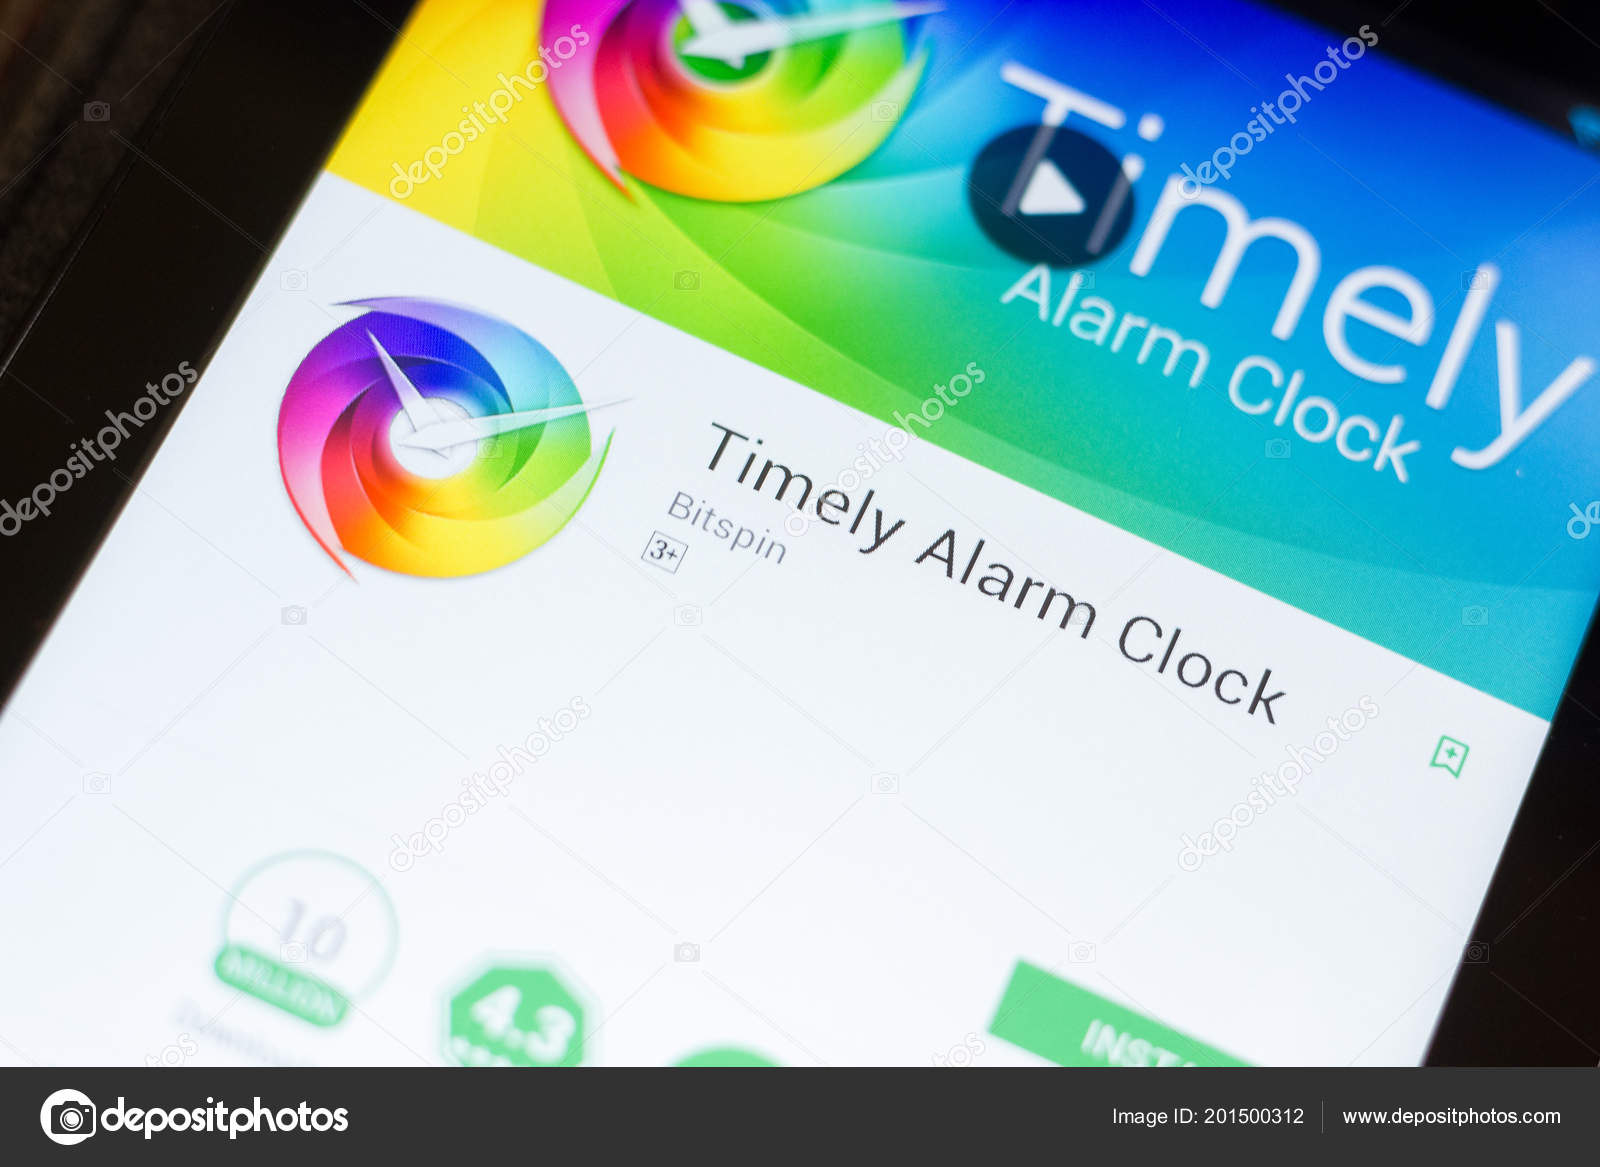 Alarm Clock App Download For Mobile